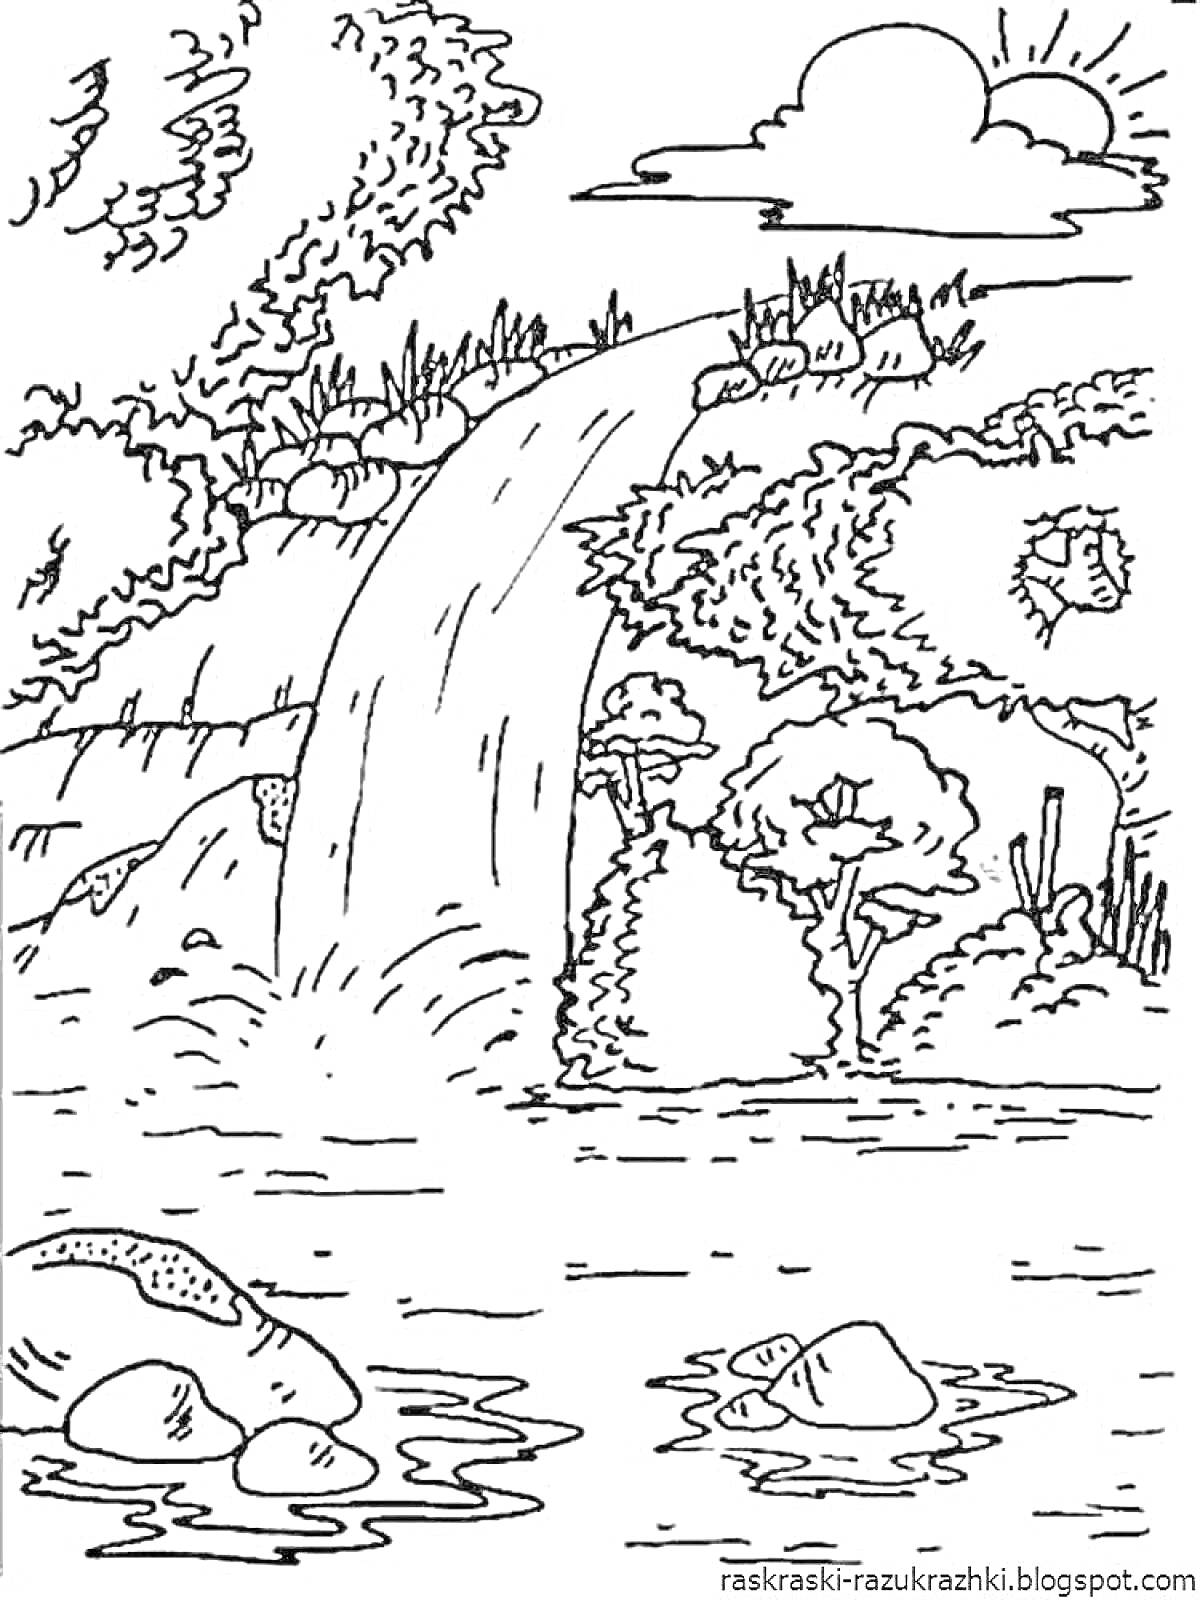 На раскраске изображено: Речка, Водопад, Деревья, Кусты, Камни, Солнце, Облака, Природа, Вода